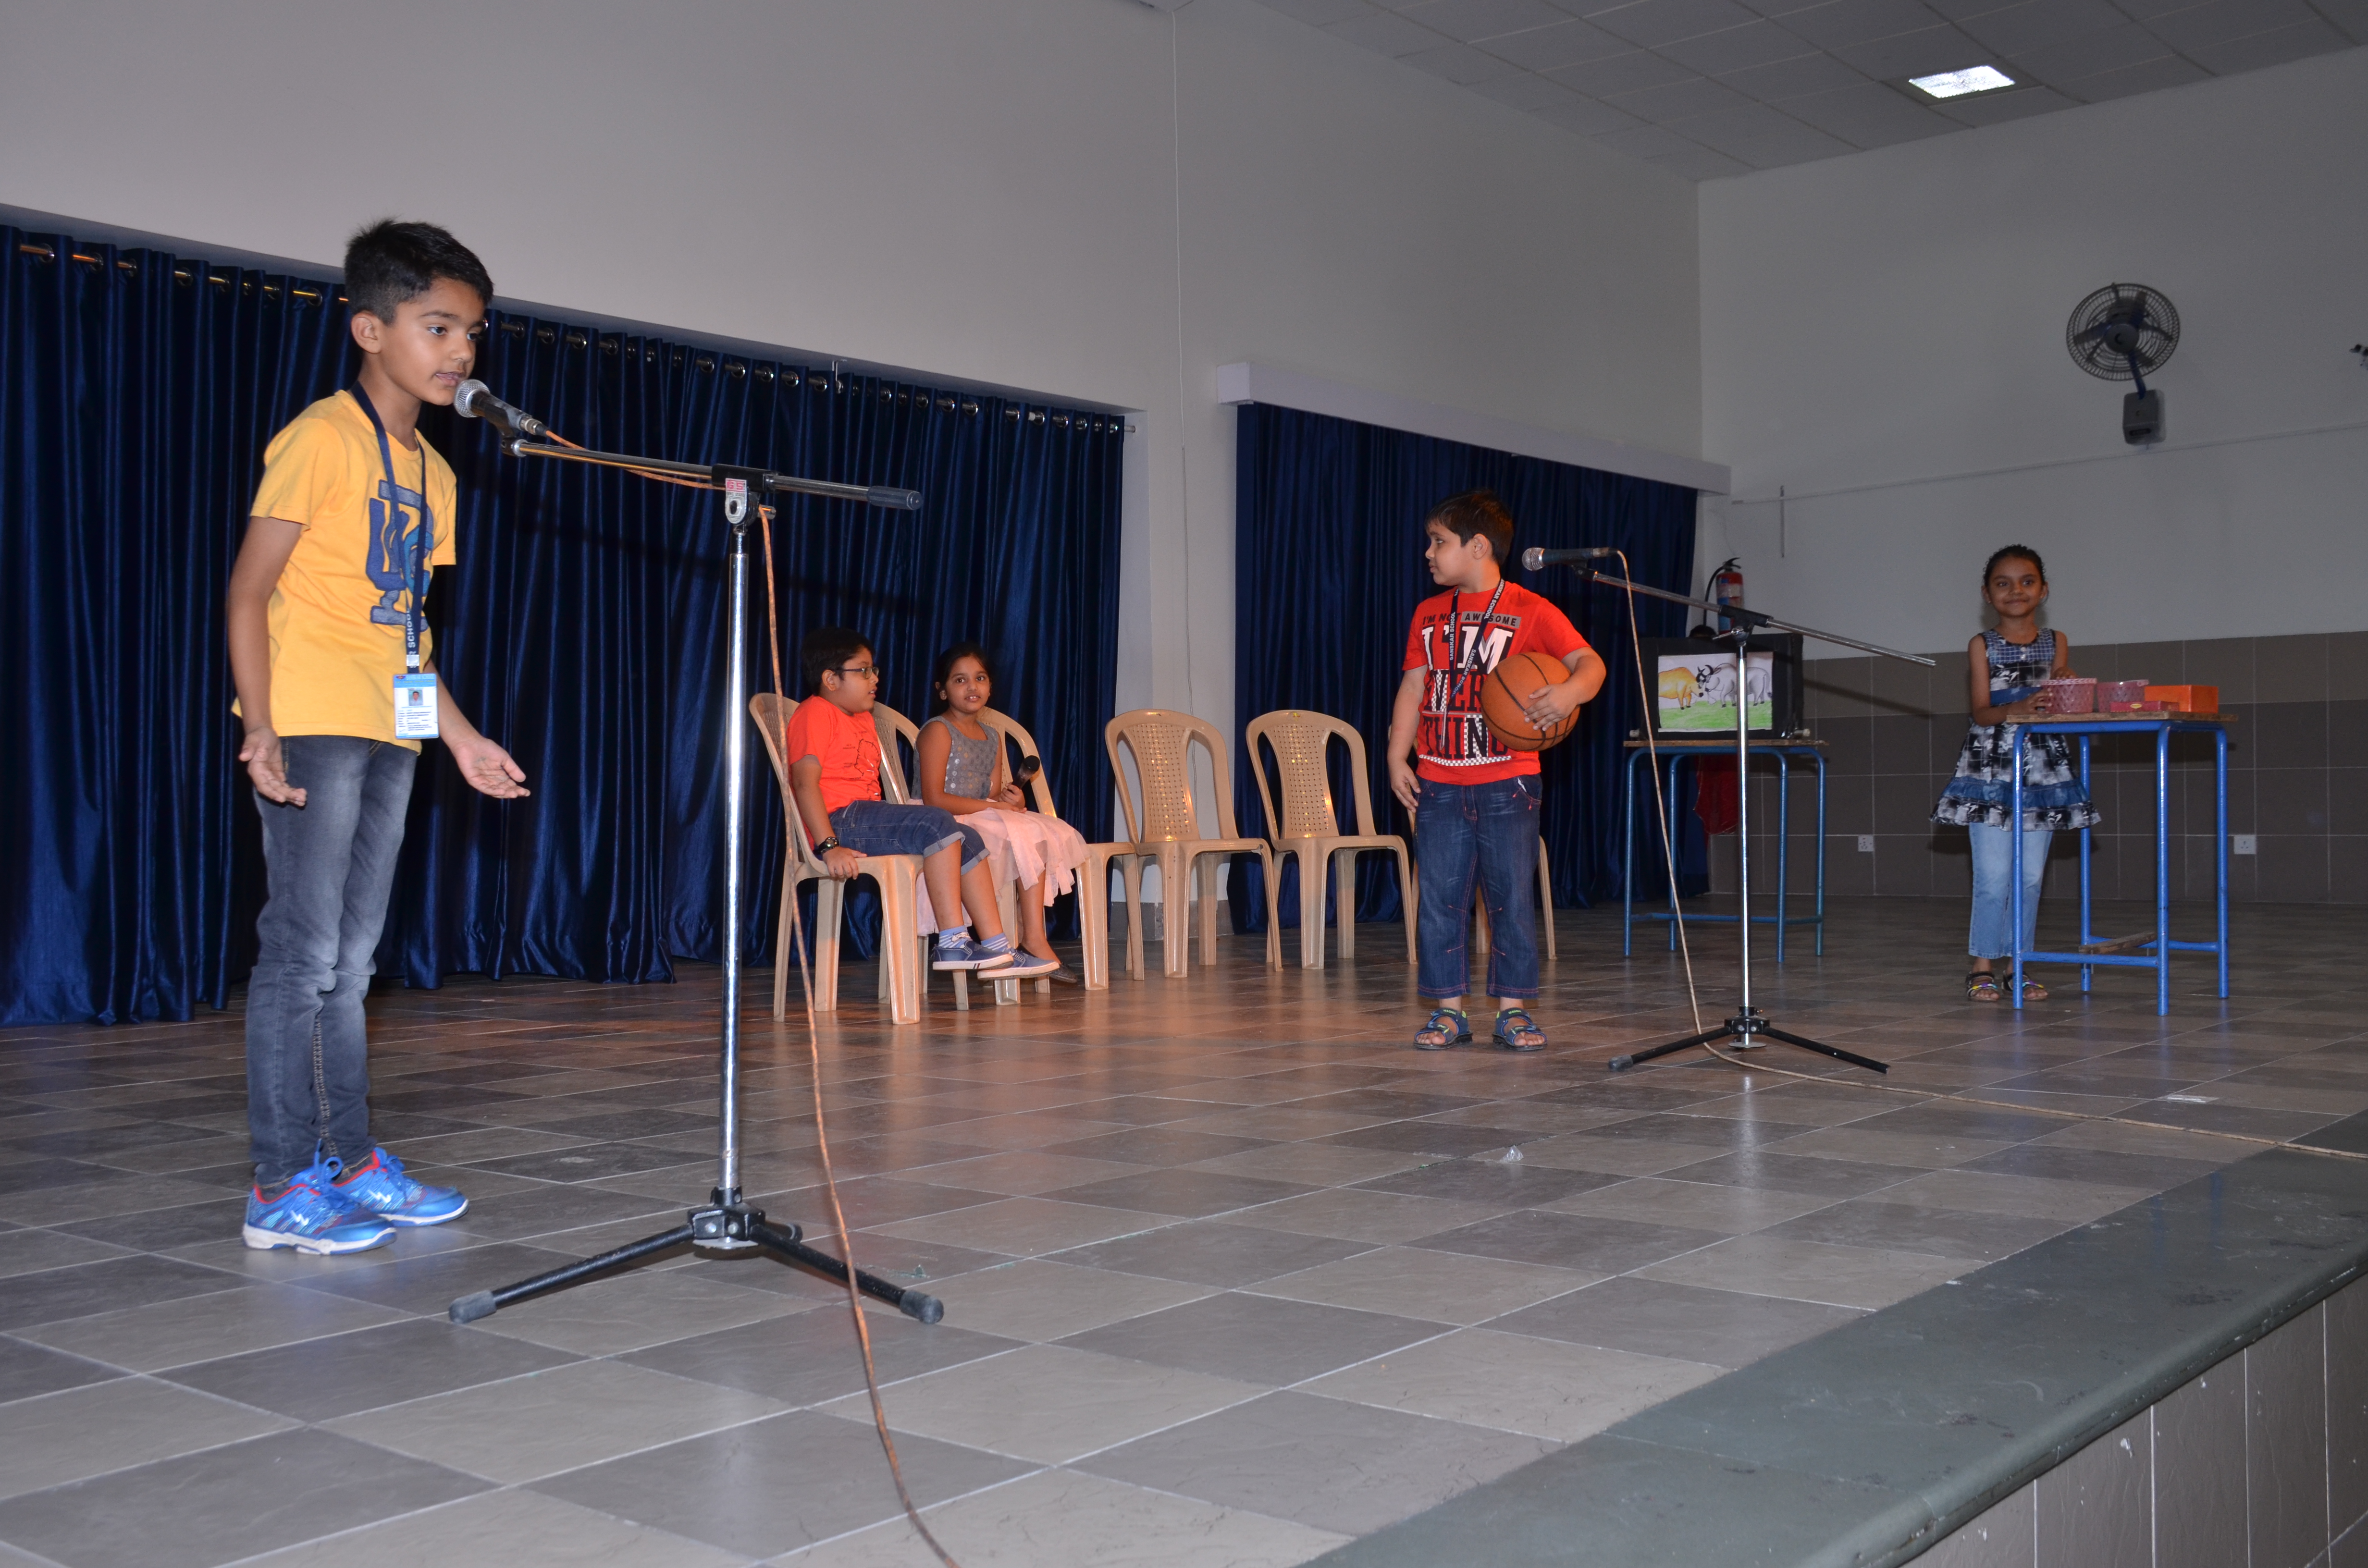 Grade II ‘Techno-word’ class show held at Sanskar School